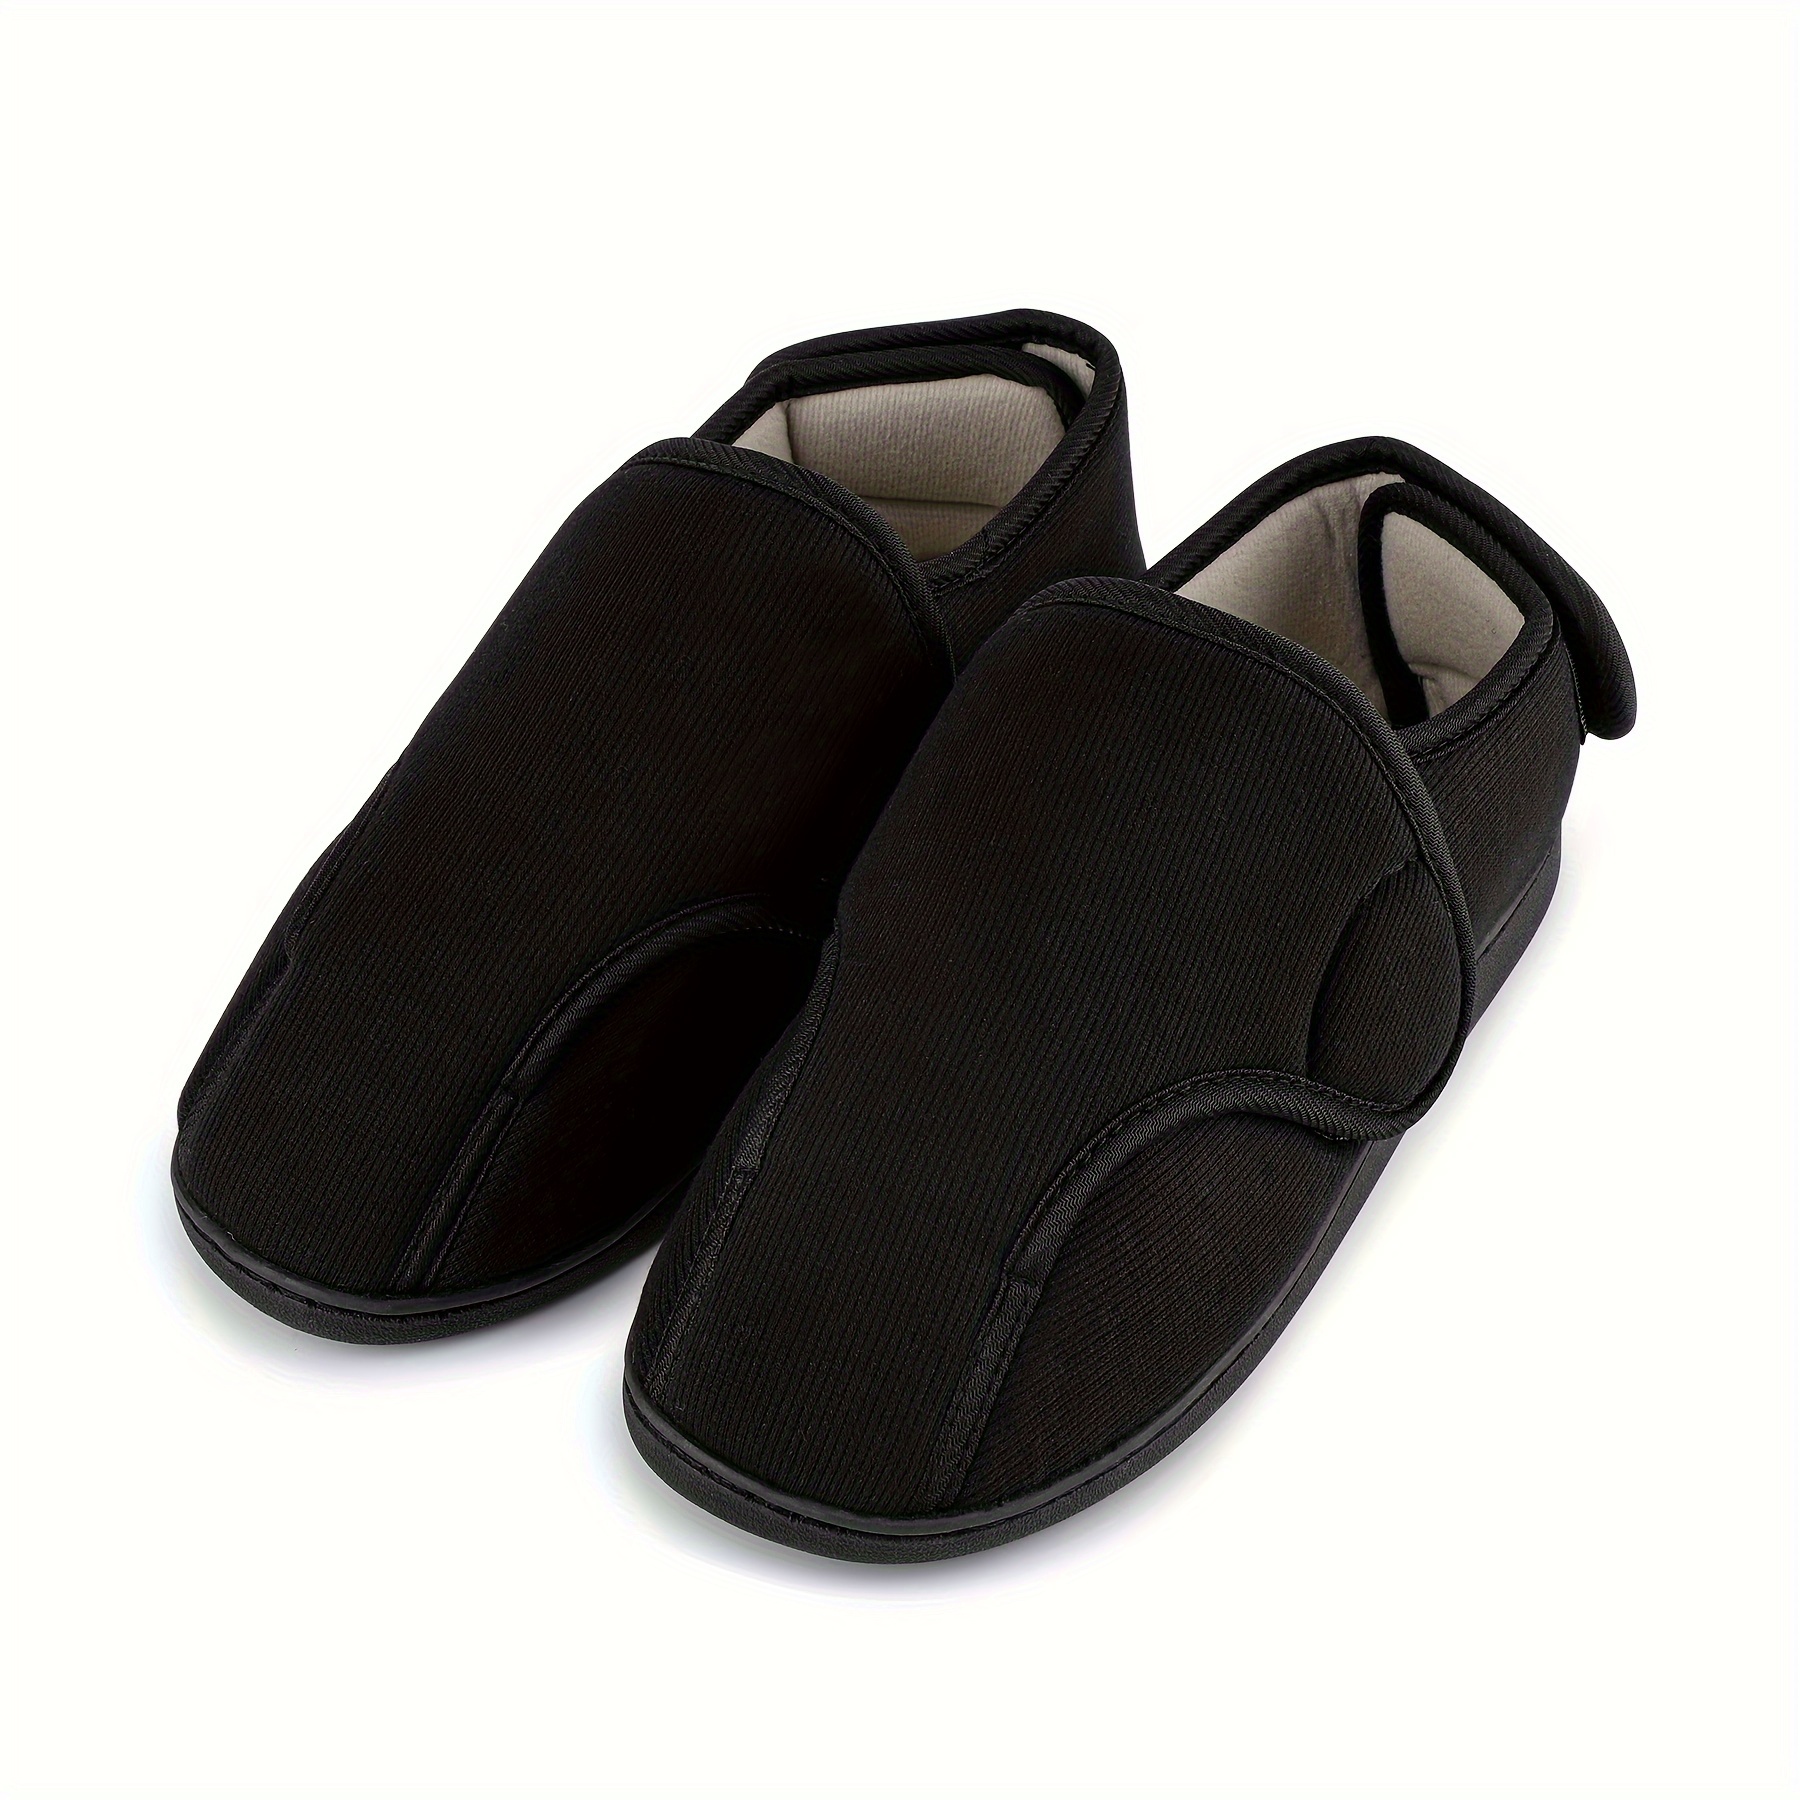 

Tiestra Men's Slippers Memory Foam Slippers Wide Fit Adjustable House Shoes For Diabetic Swollen Feet